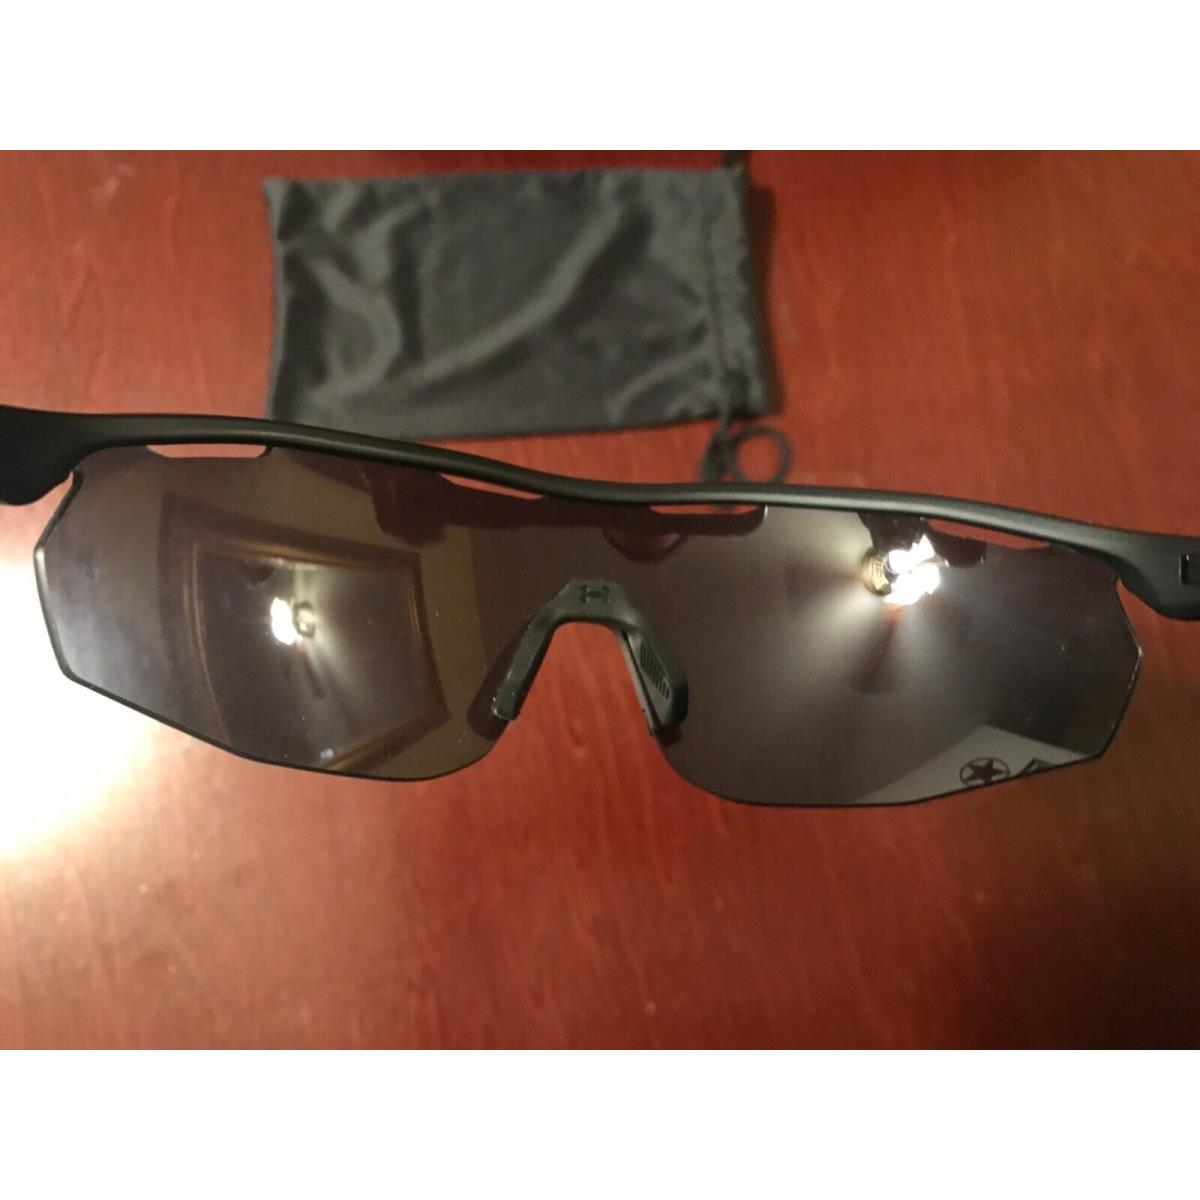 Under Armour sunglasses  - Black Frame, Black Lens 8